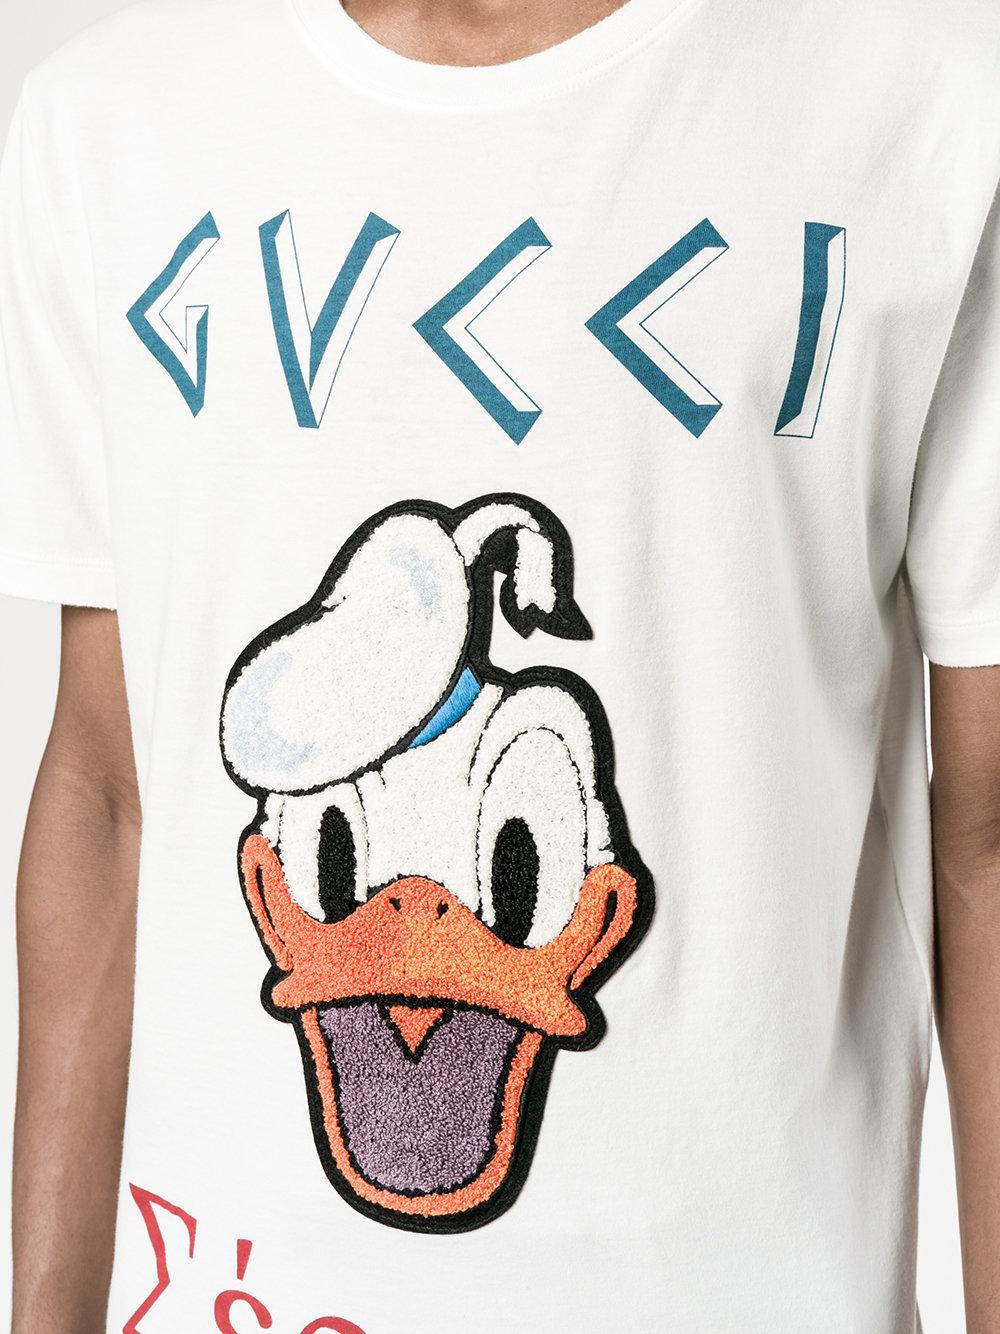 t shirt donald duck gucci